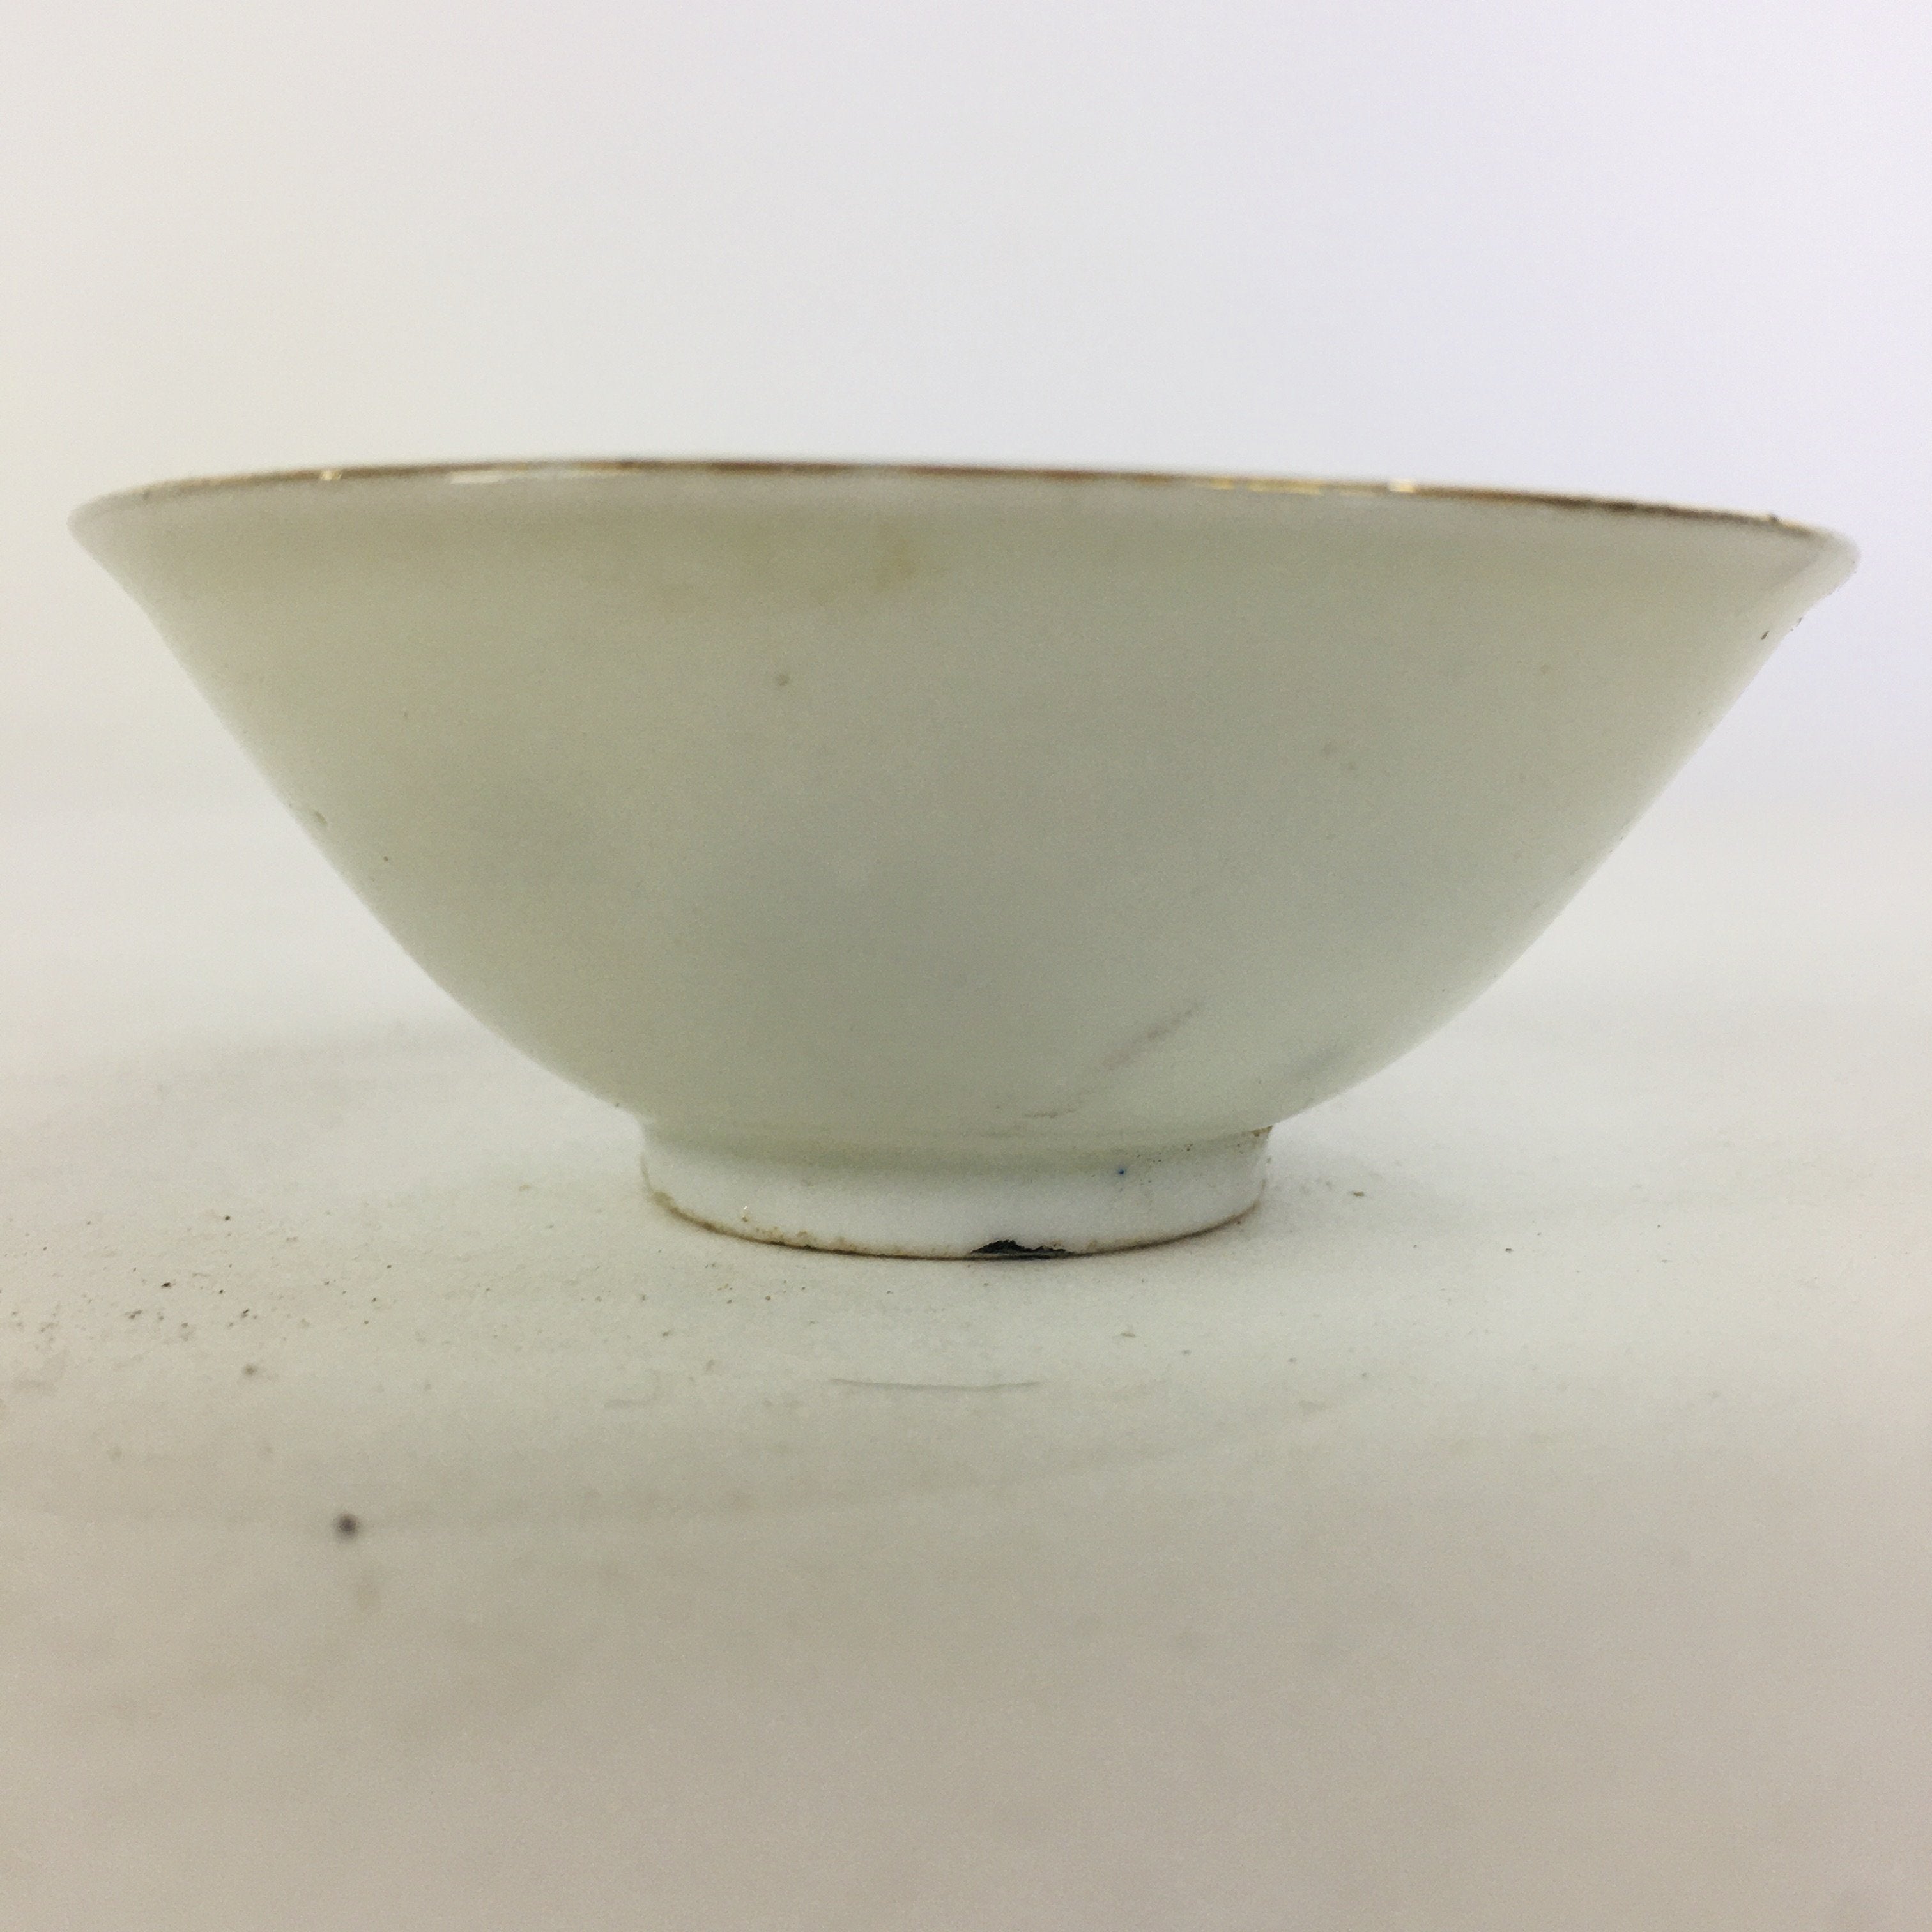 Japanese Porcelain New Year Sake Cup Vtg Guinomi Ochoko Fortunate Design GU939